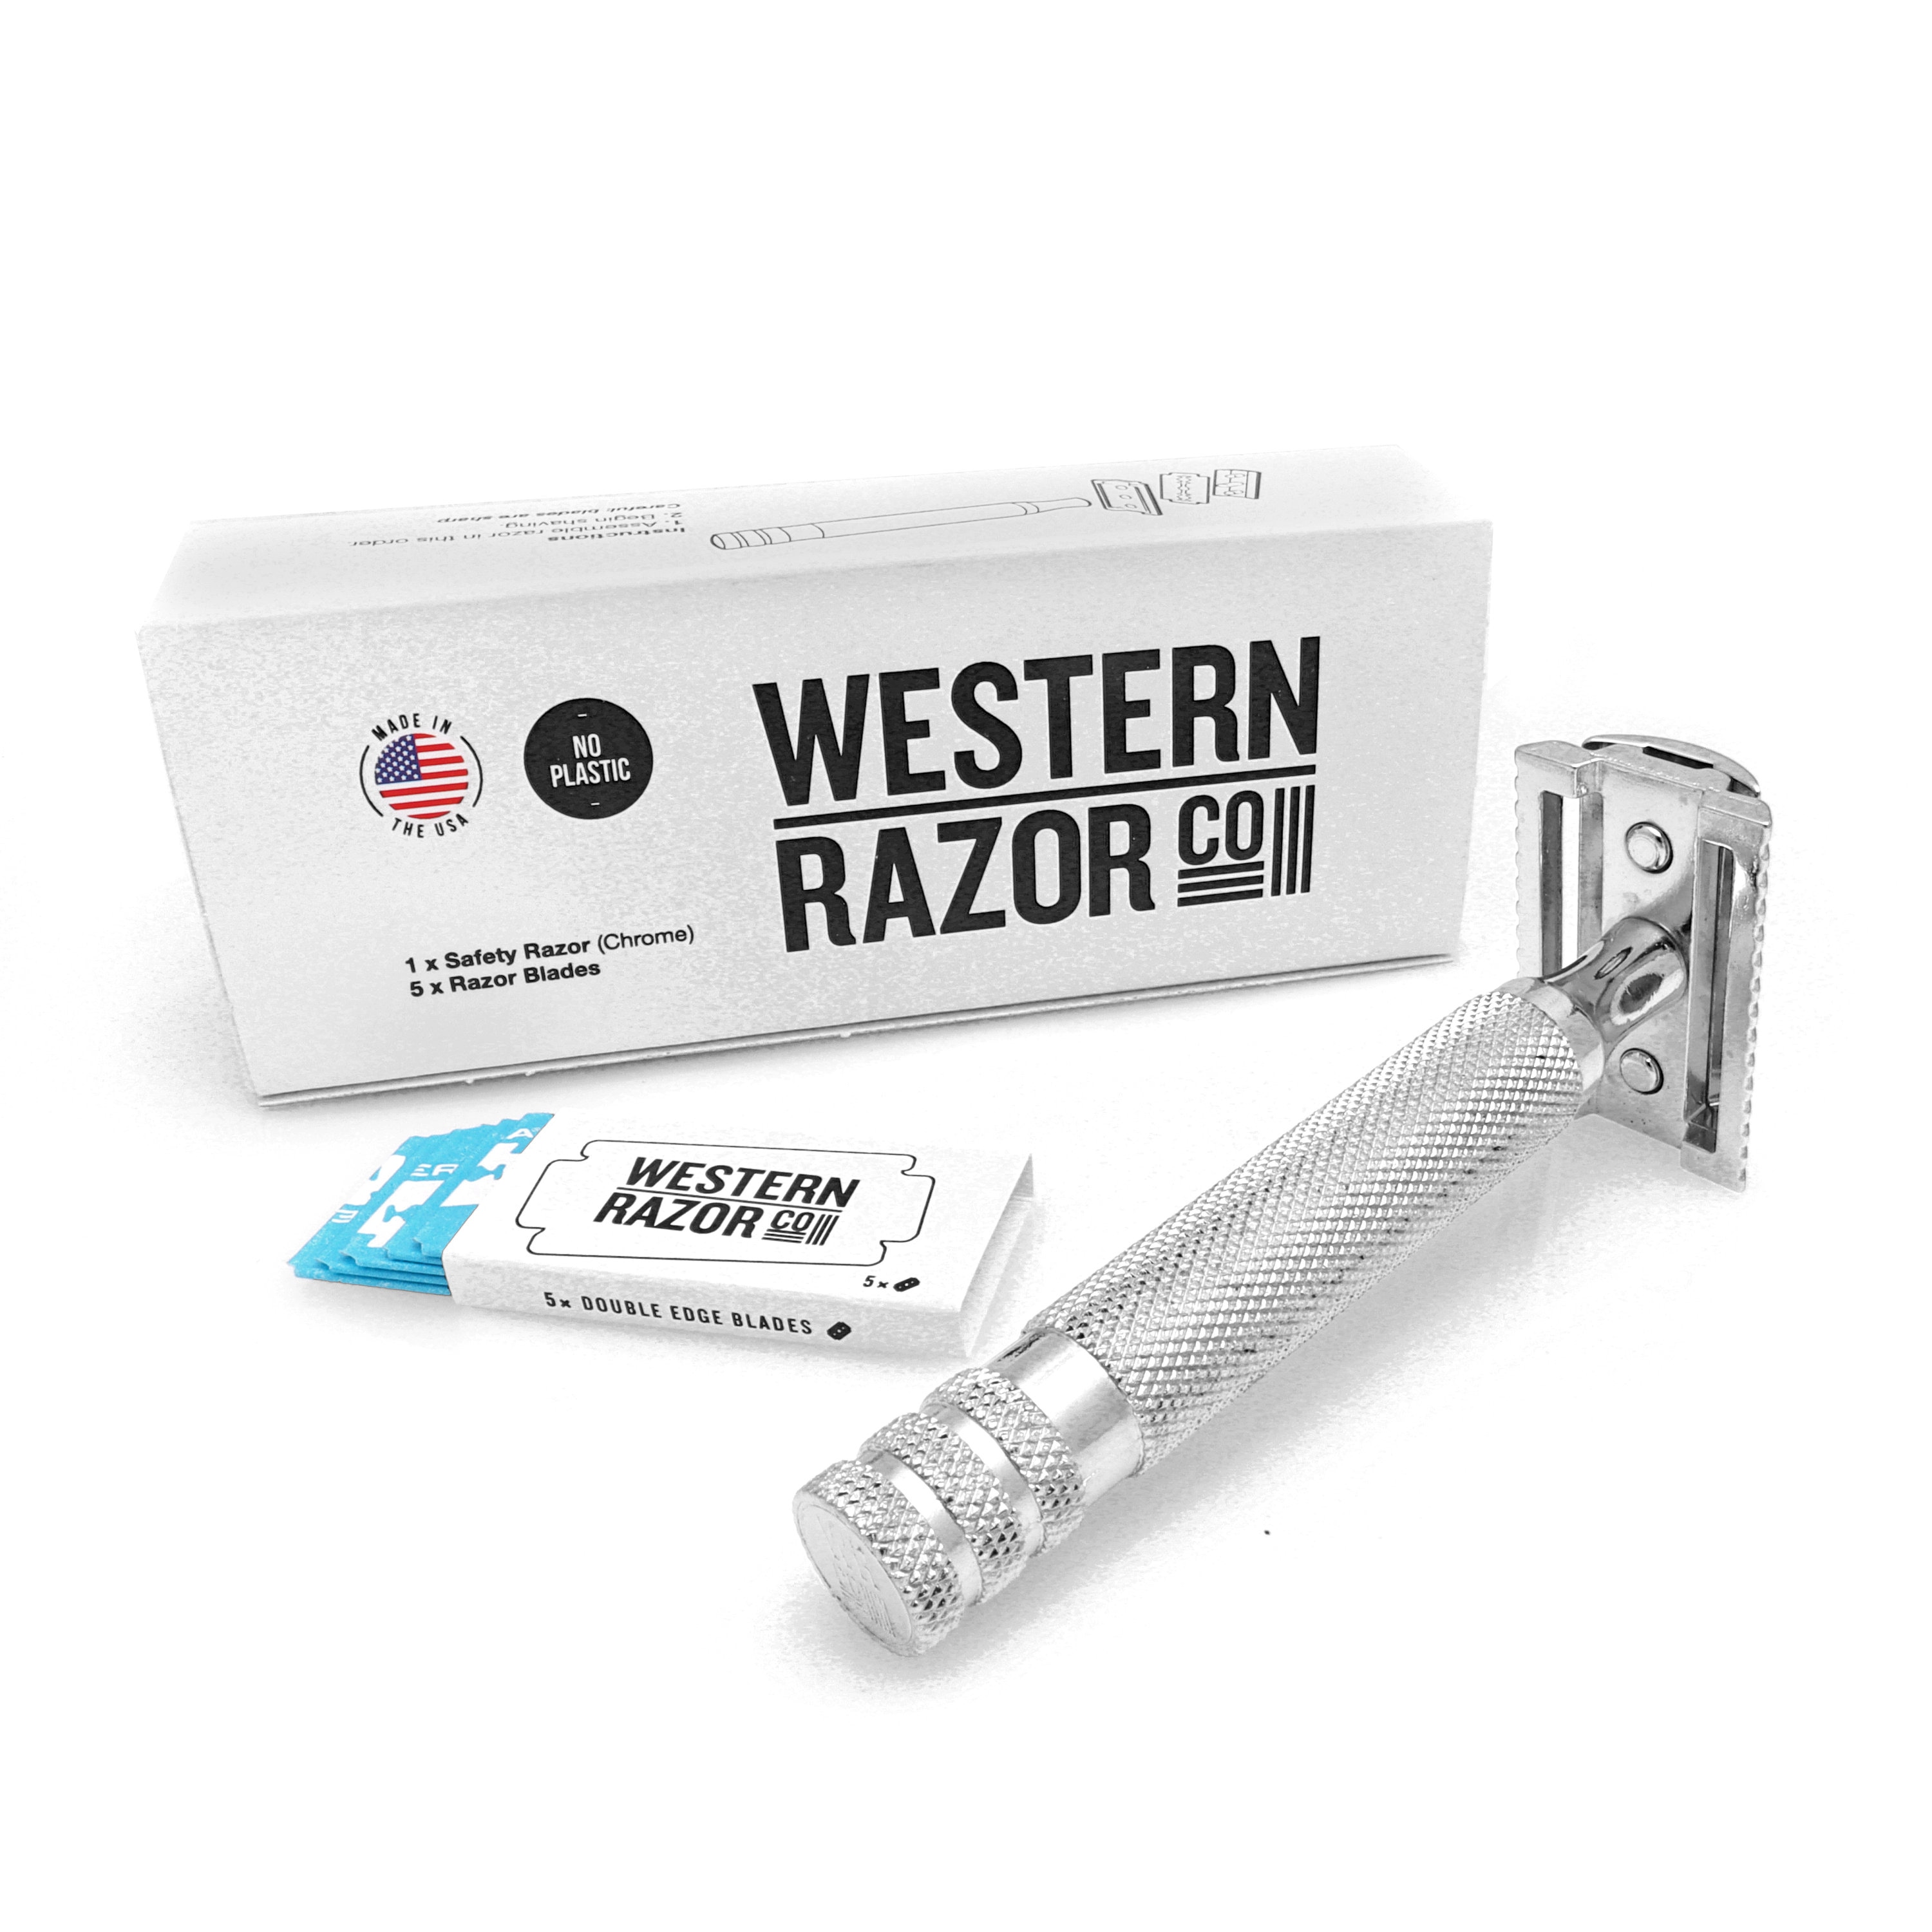 Home made roller sharpener for safety razor blades - Wegian